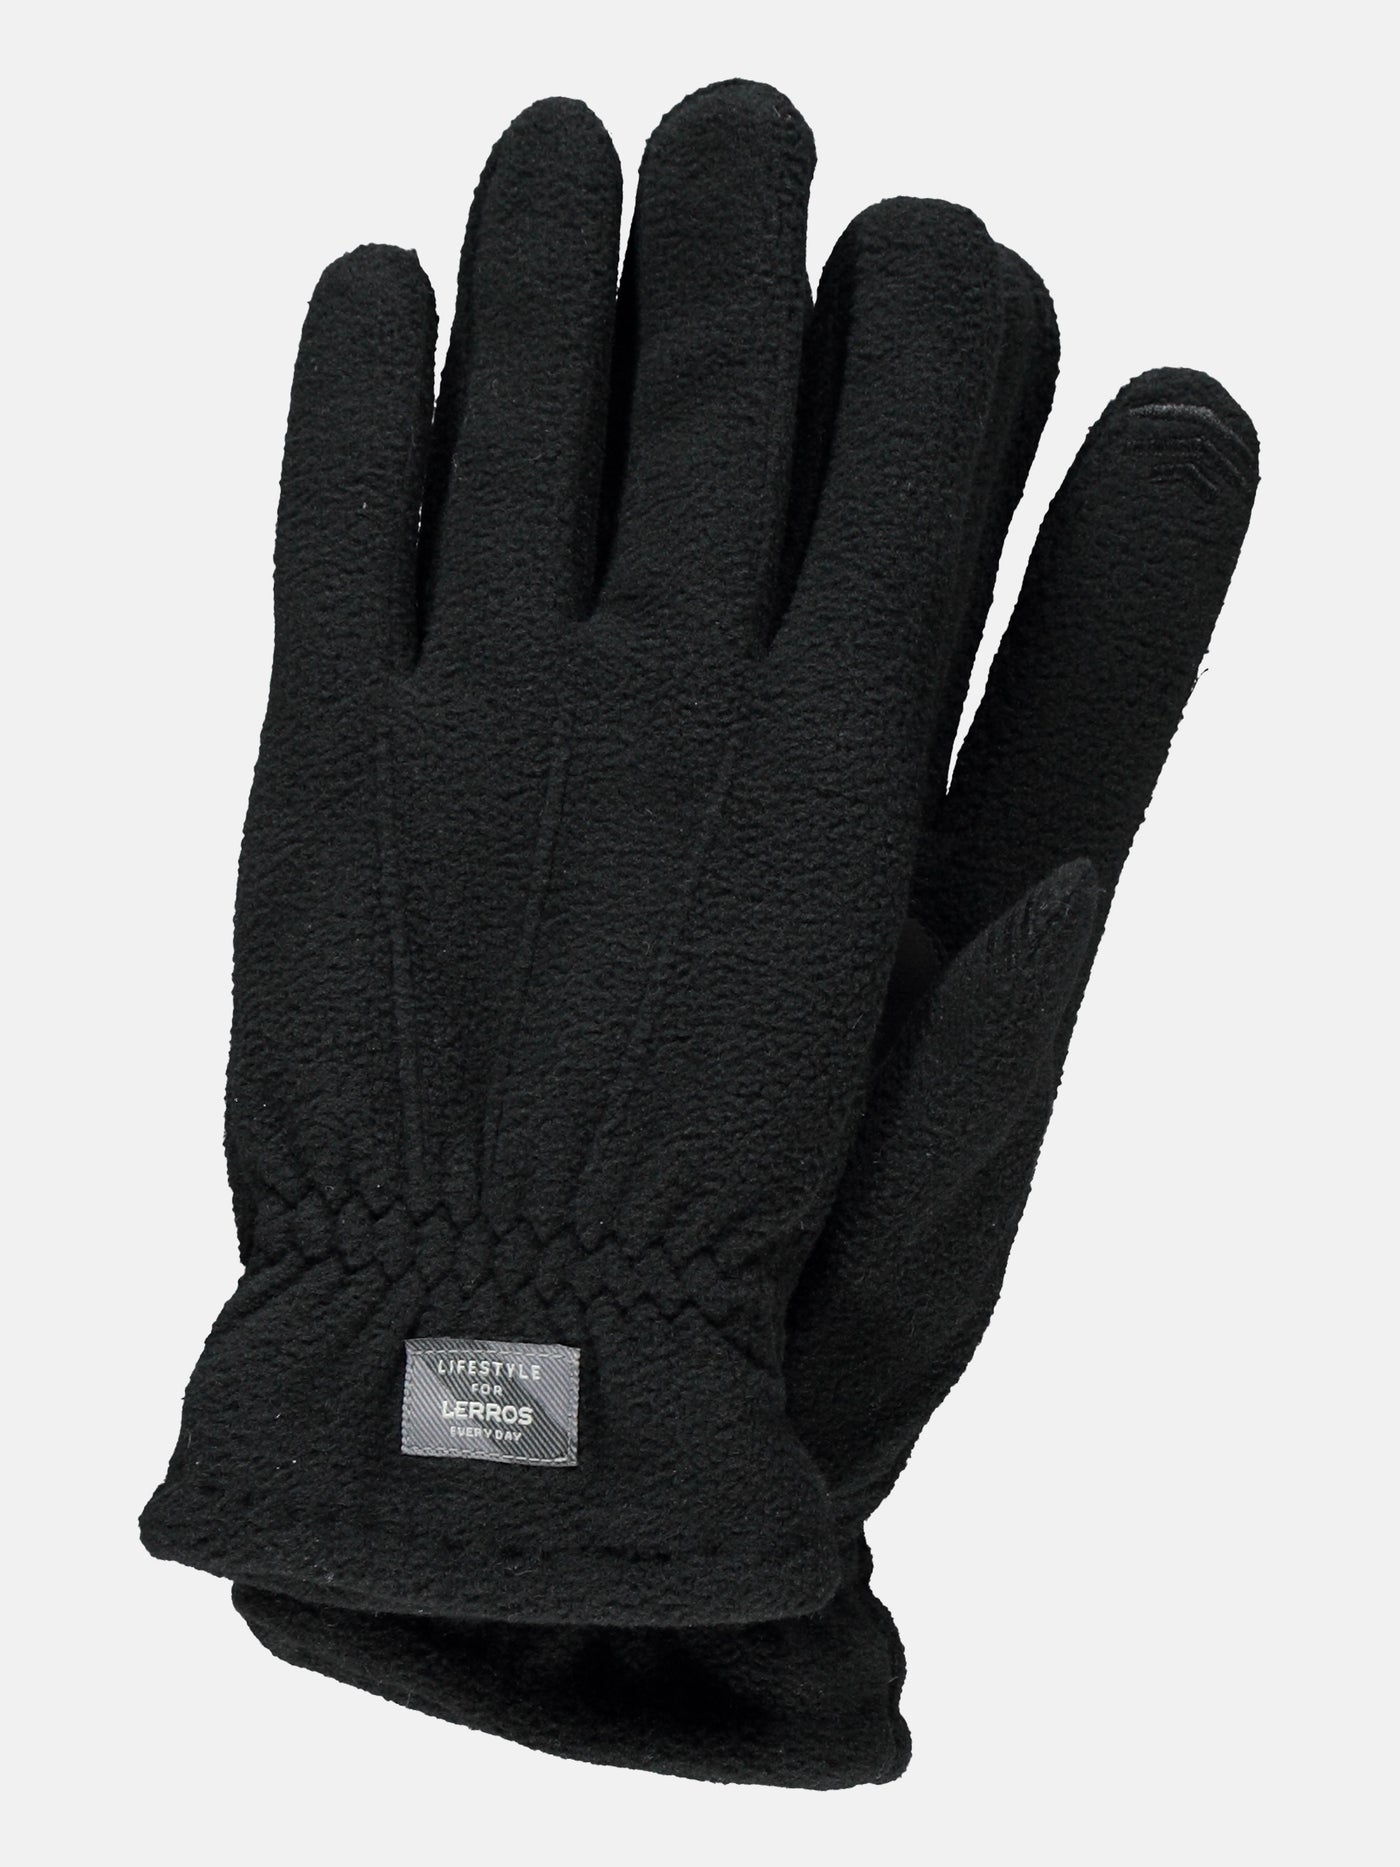 Fleece glove, plain colour